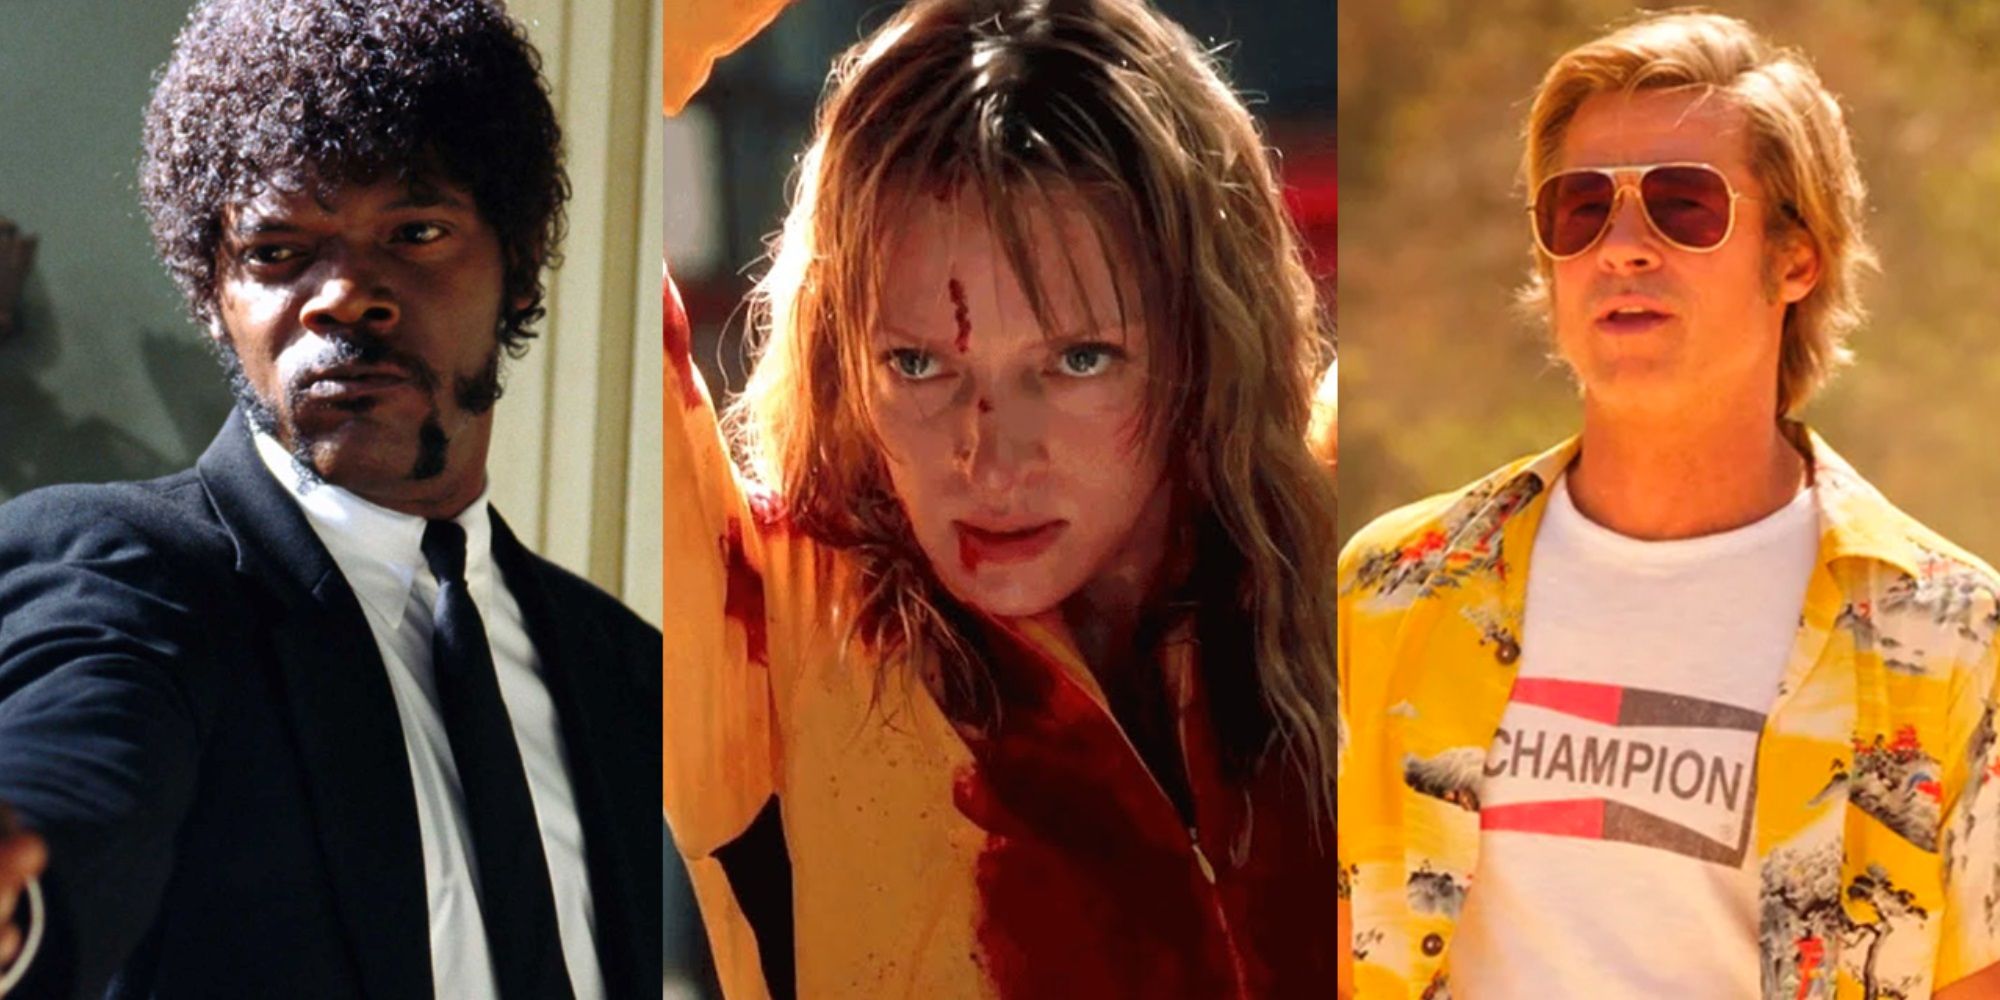 Pulp Fiction cast list reveals Uma Thurman and John Travolta were not  Quentin Tarantino's preferred choice, London Evening Standard